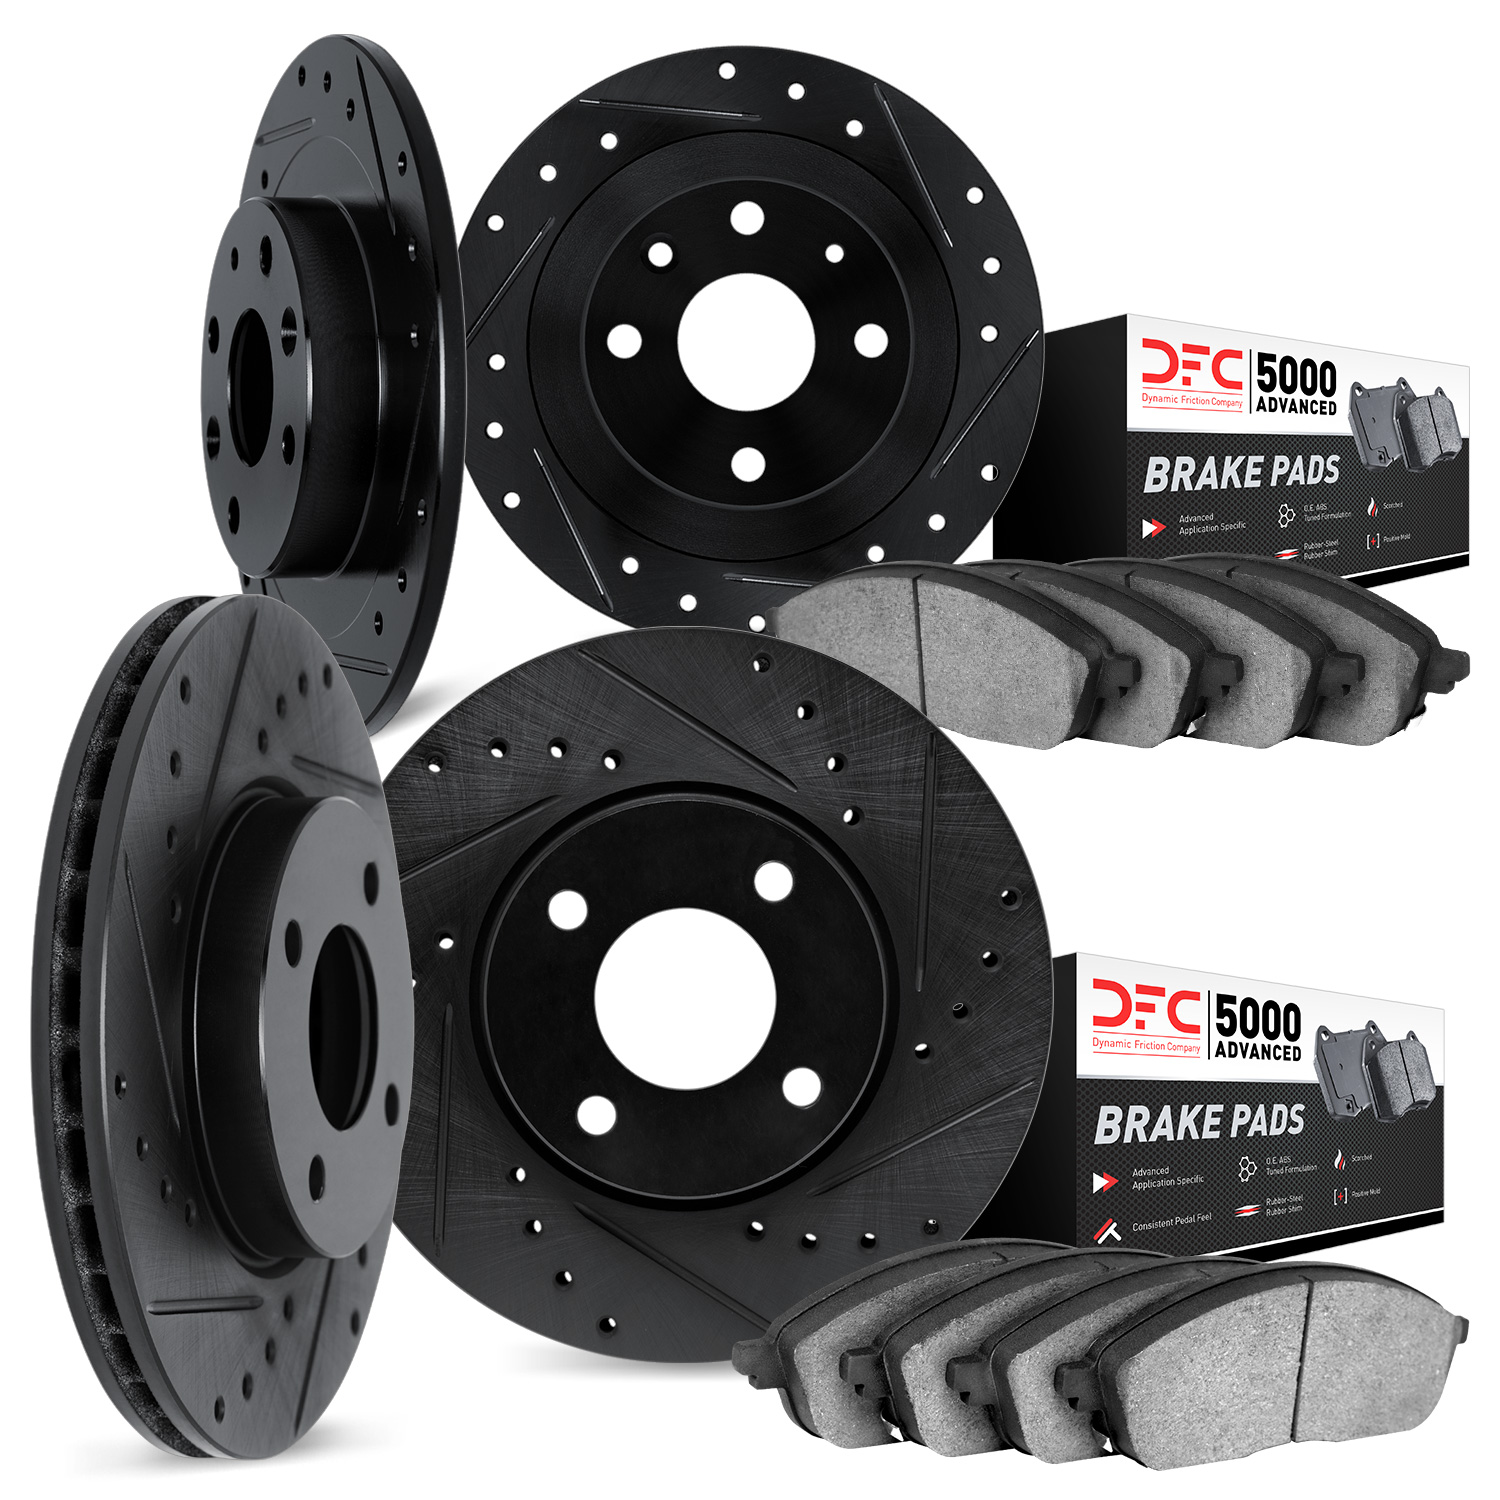 8504-03058 Drilled/Slotted Brake Rotors w/5000 Advanced Brake Pads Kit [Black], 2012-2017 Multiple Makes/Models, Position: Front